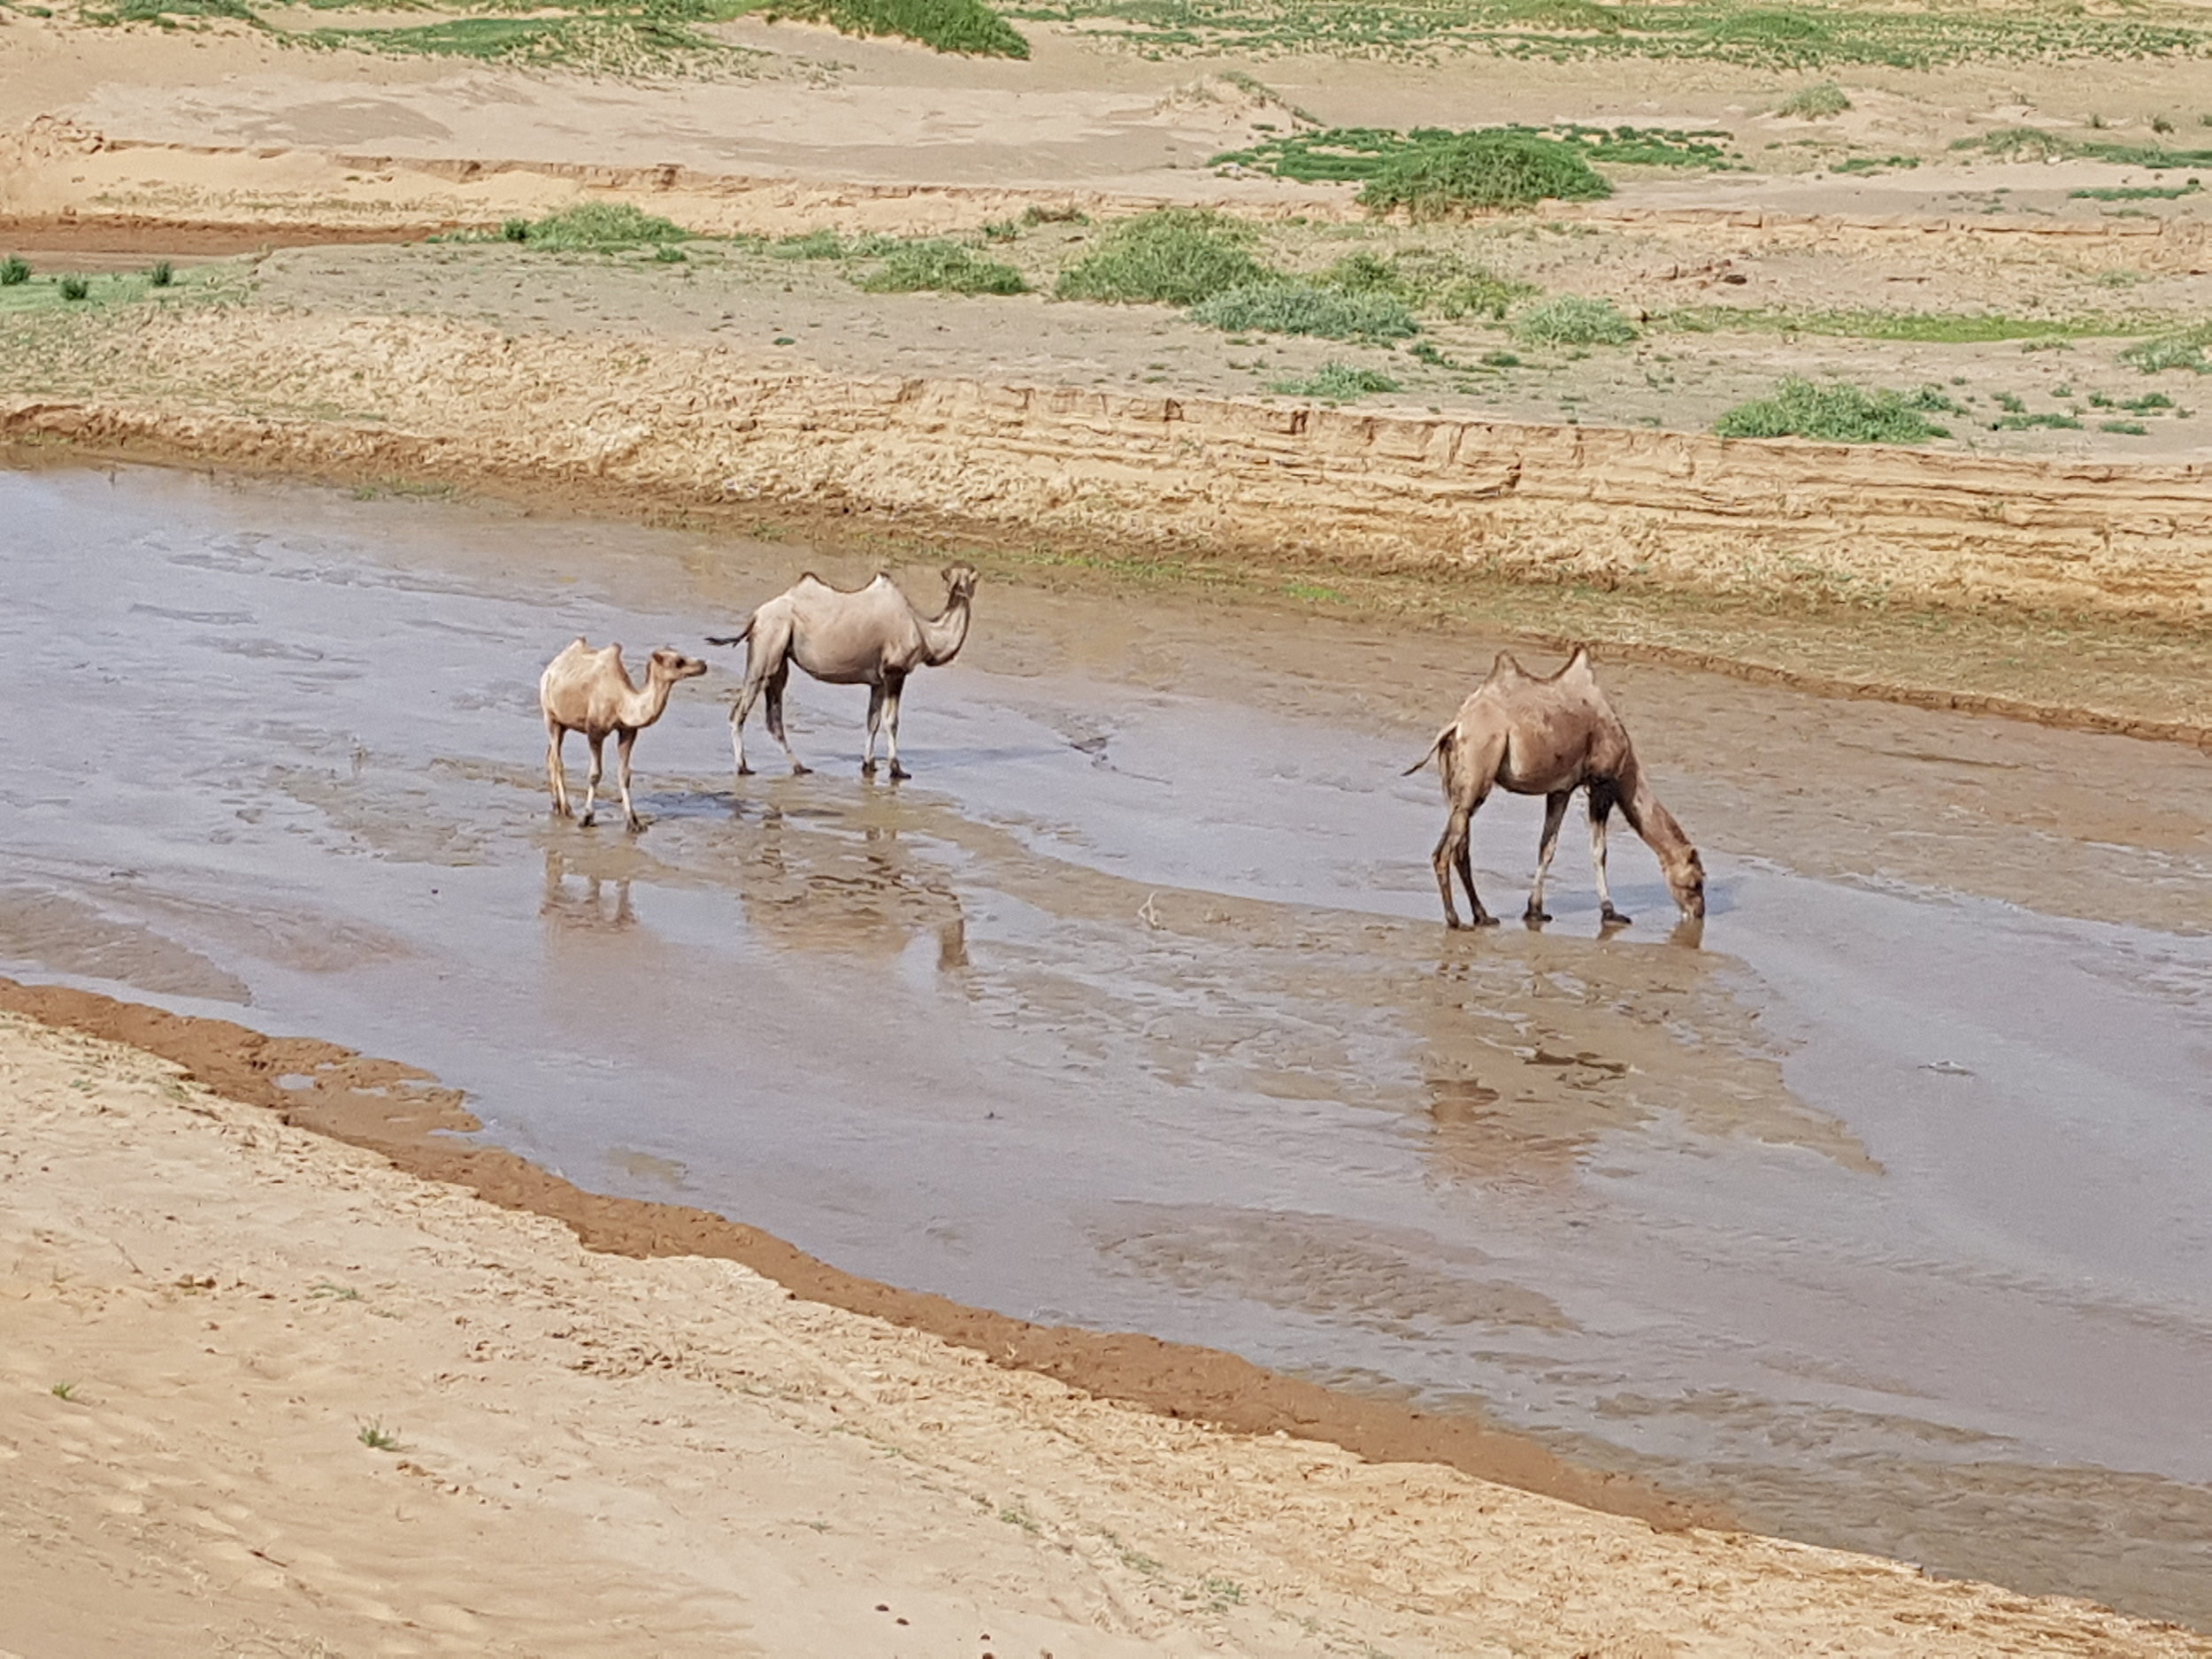 Bactrian camels drinking in the Gobi Desert